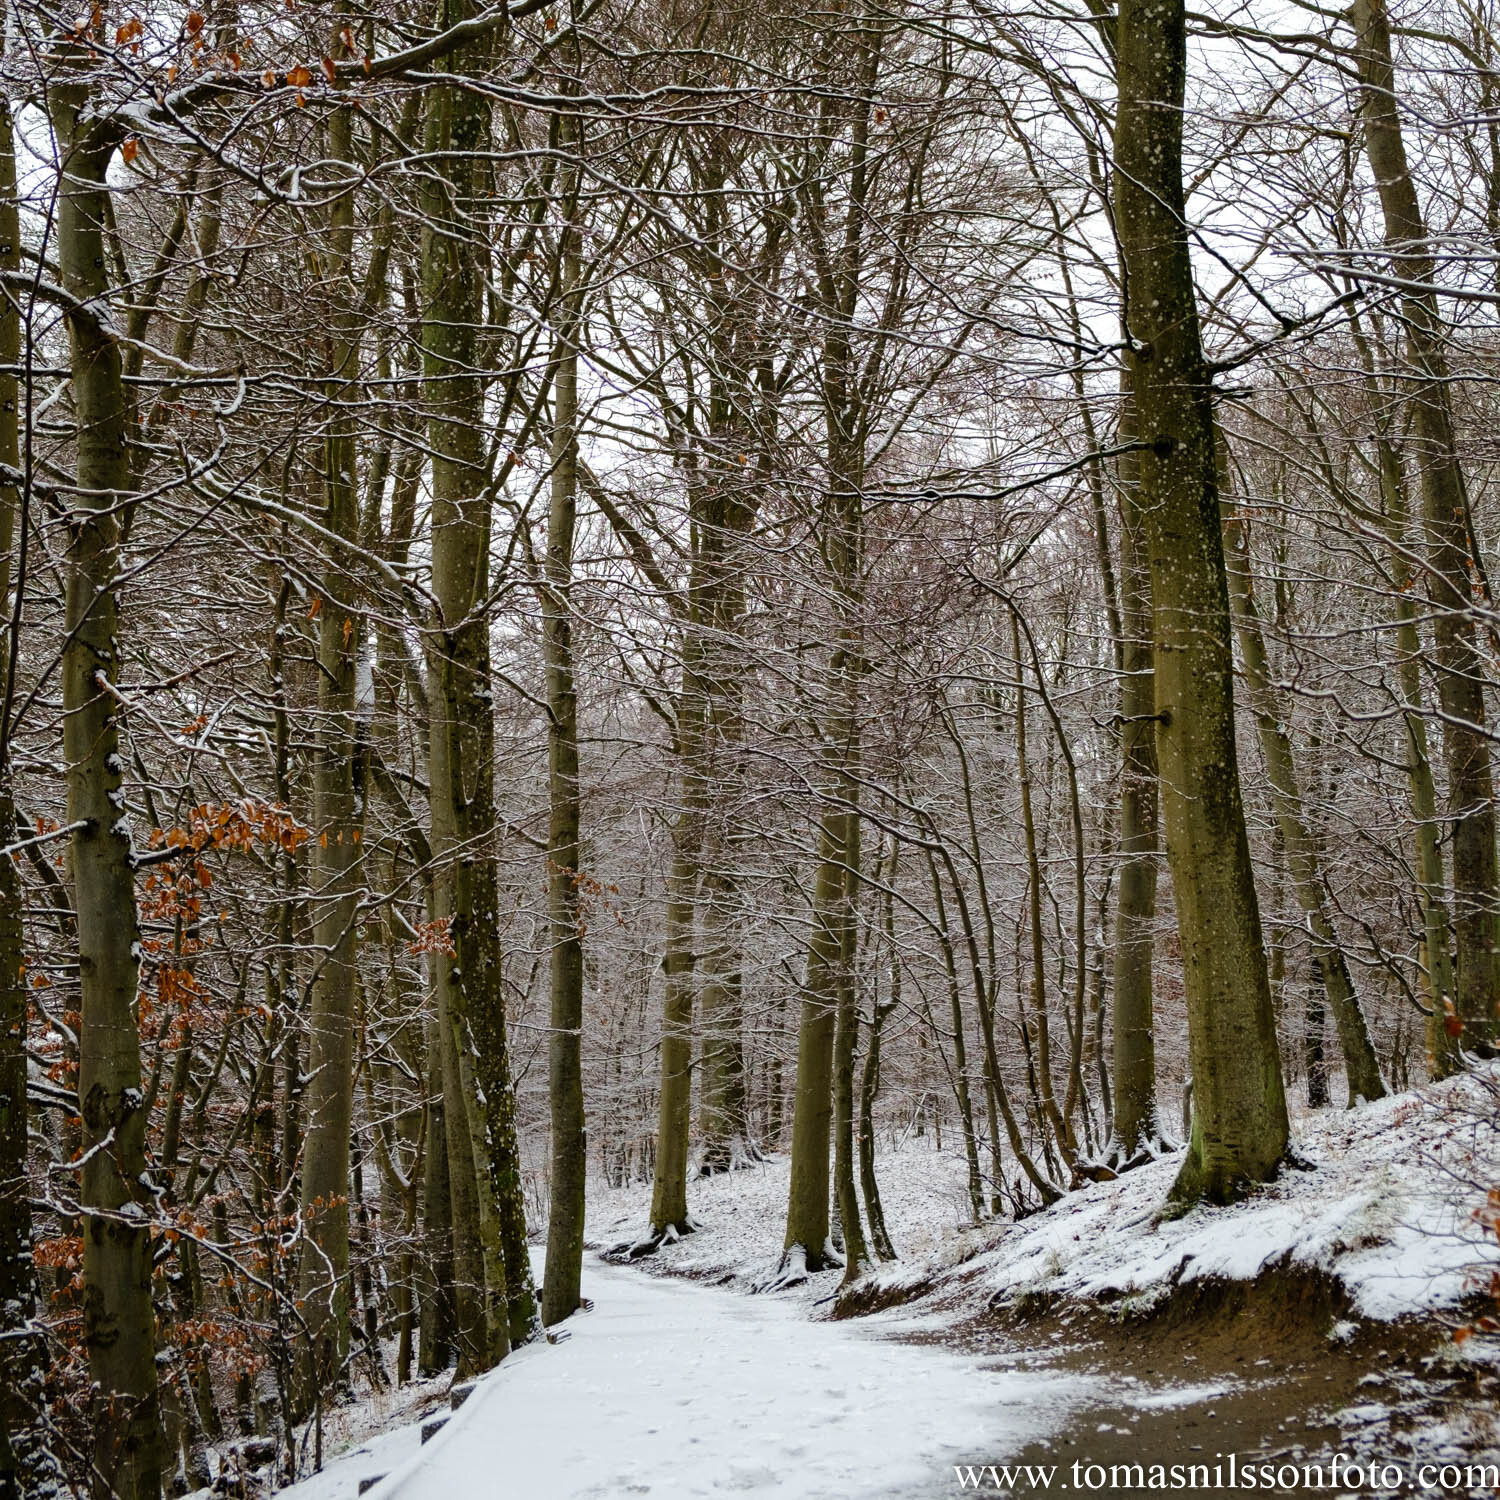 Day 18 - January 18: Winter Trees